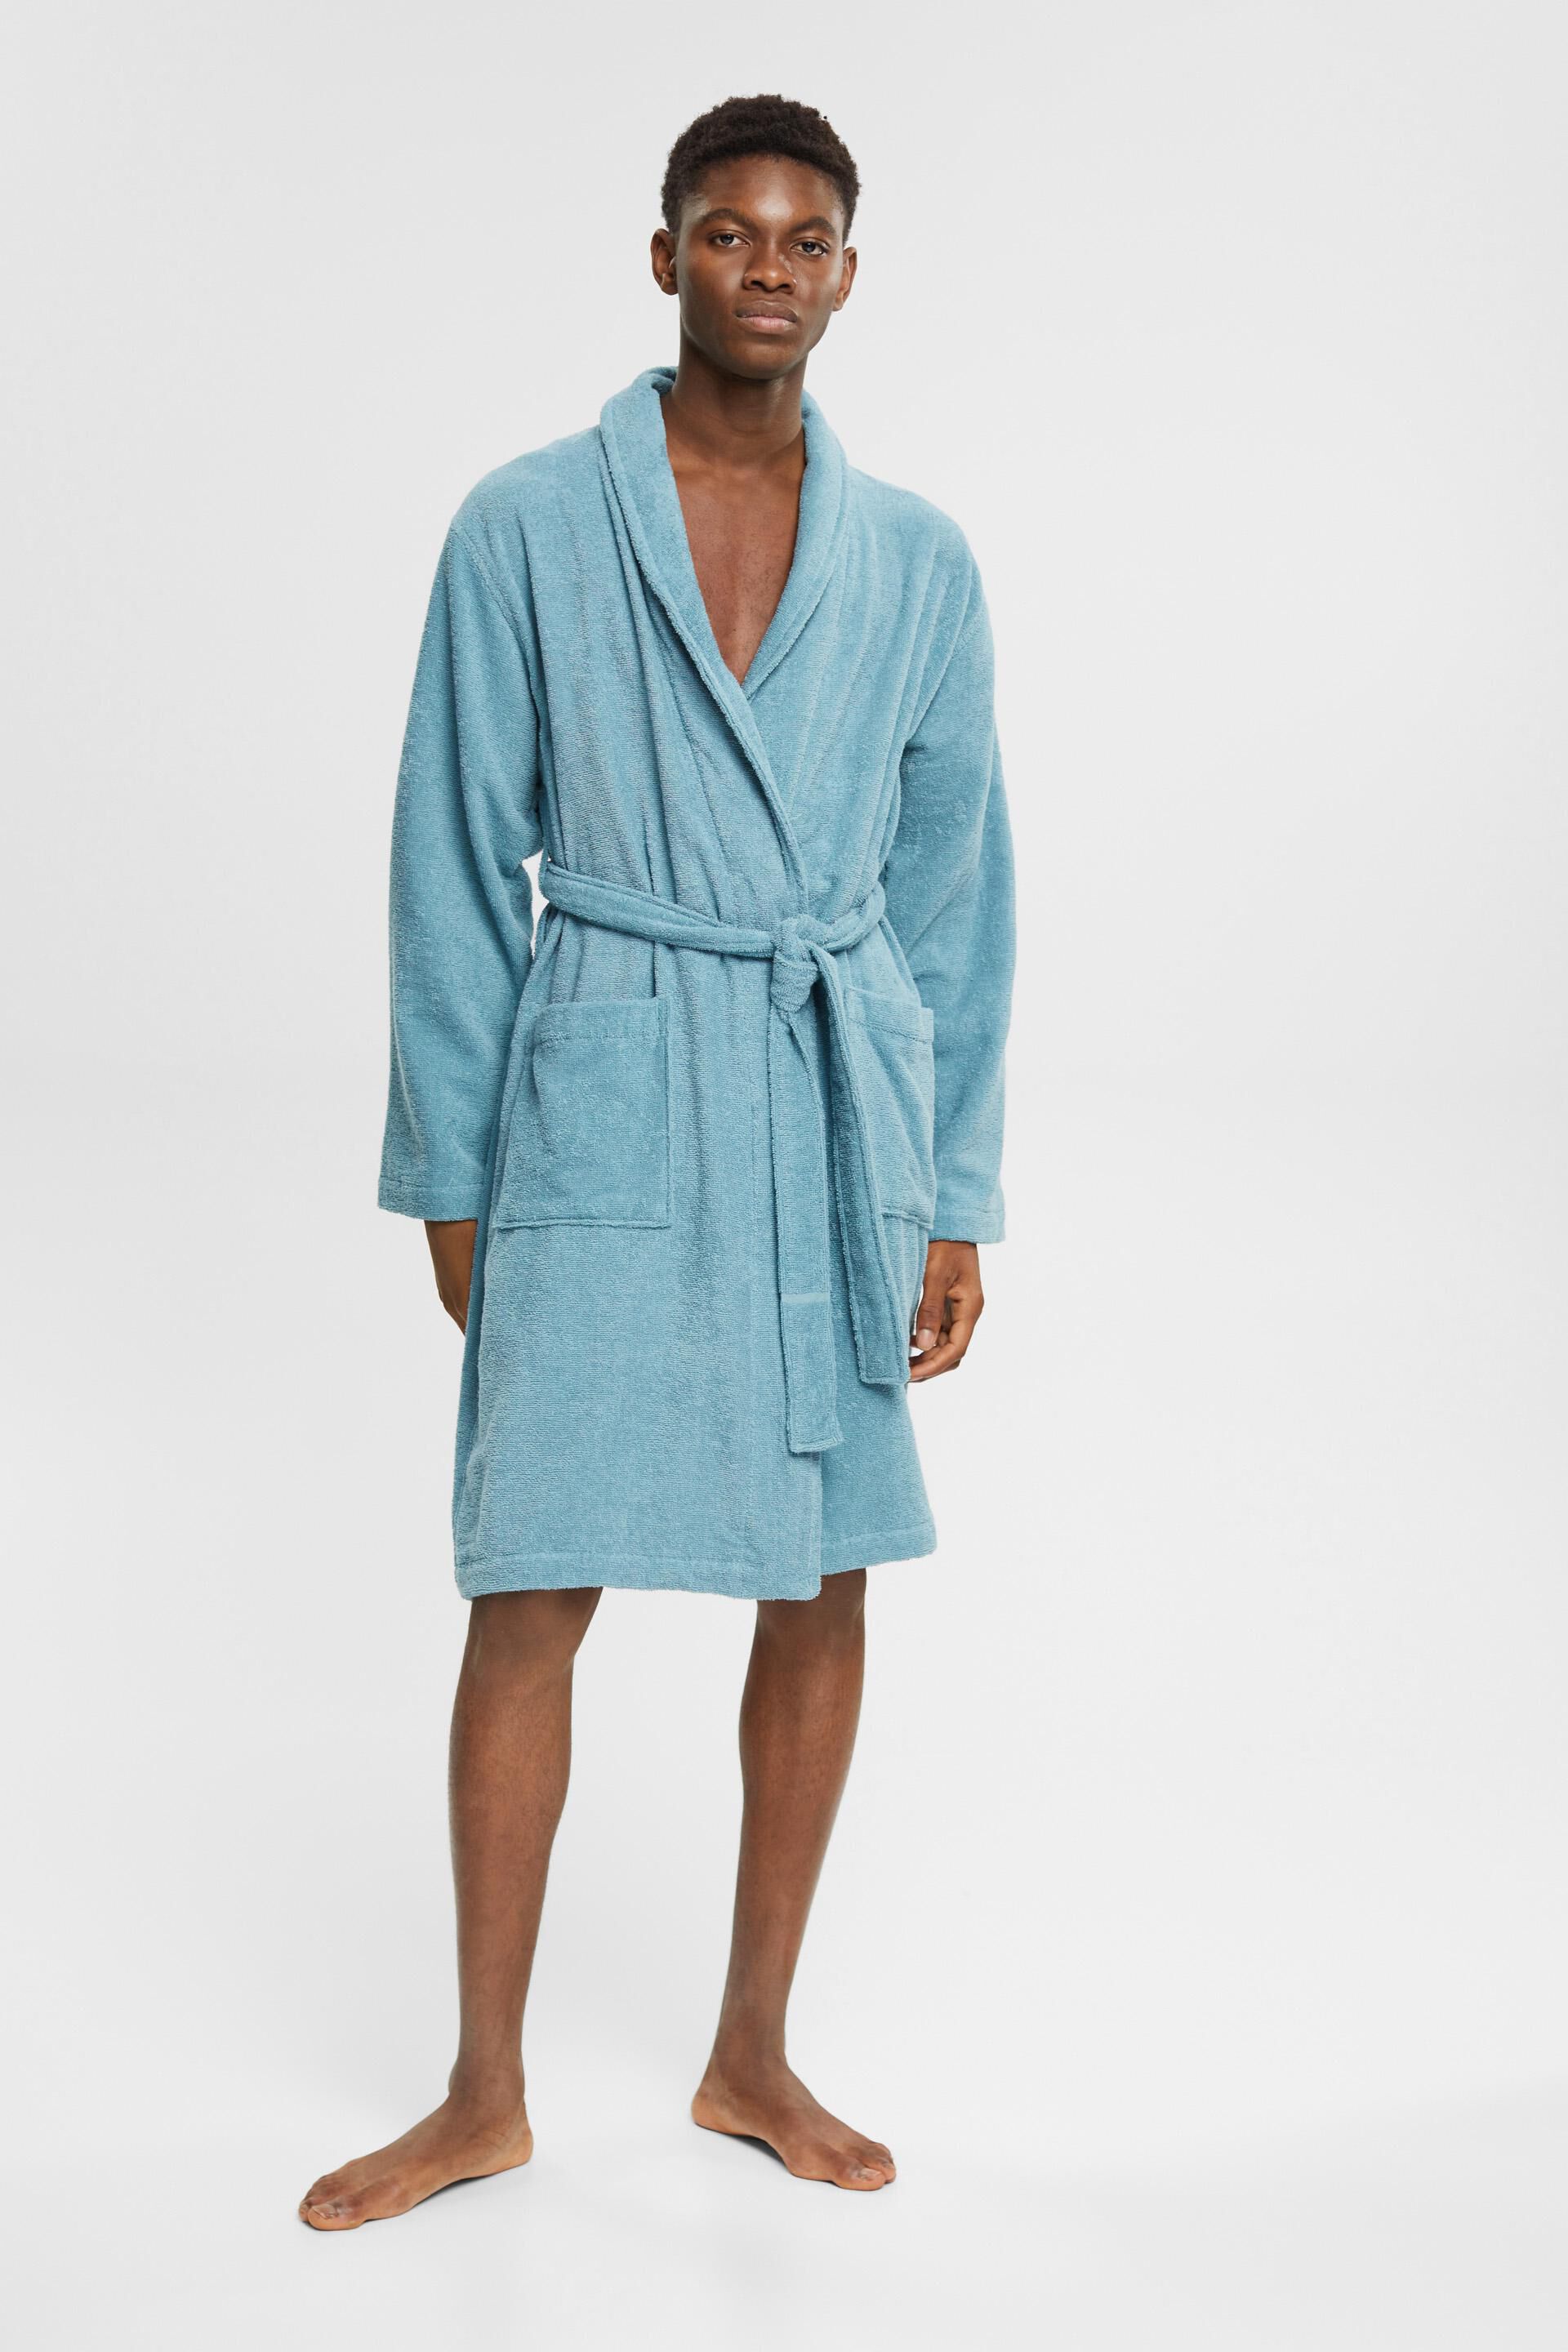 Esprit T Shirt Unisex bathrobe, 100% cotton